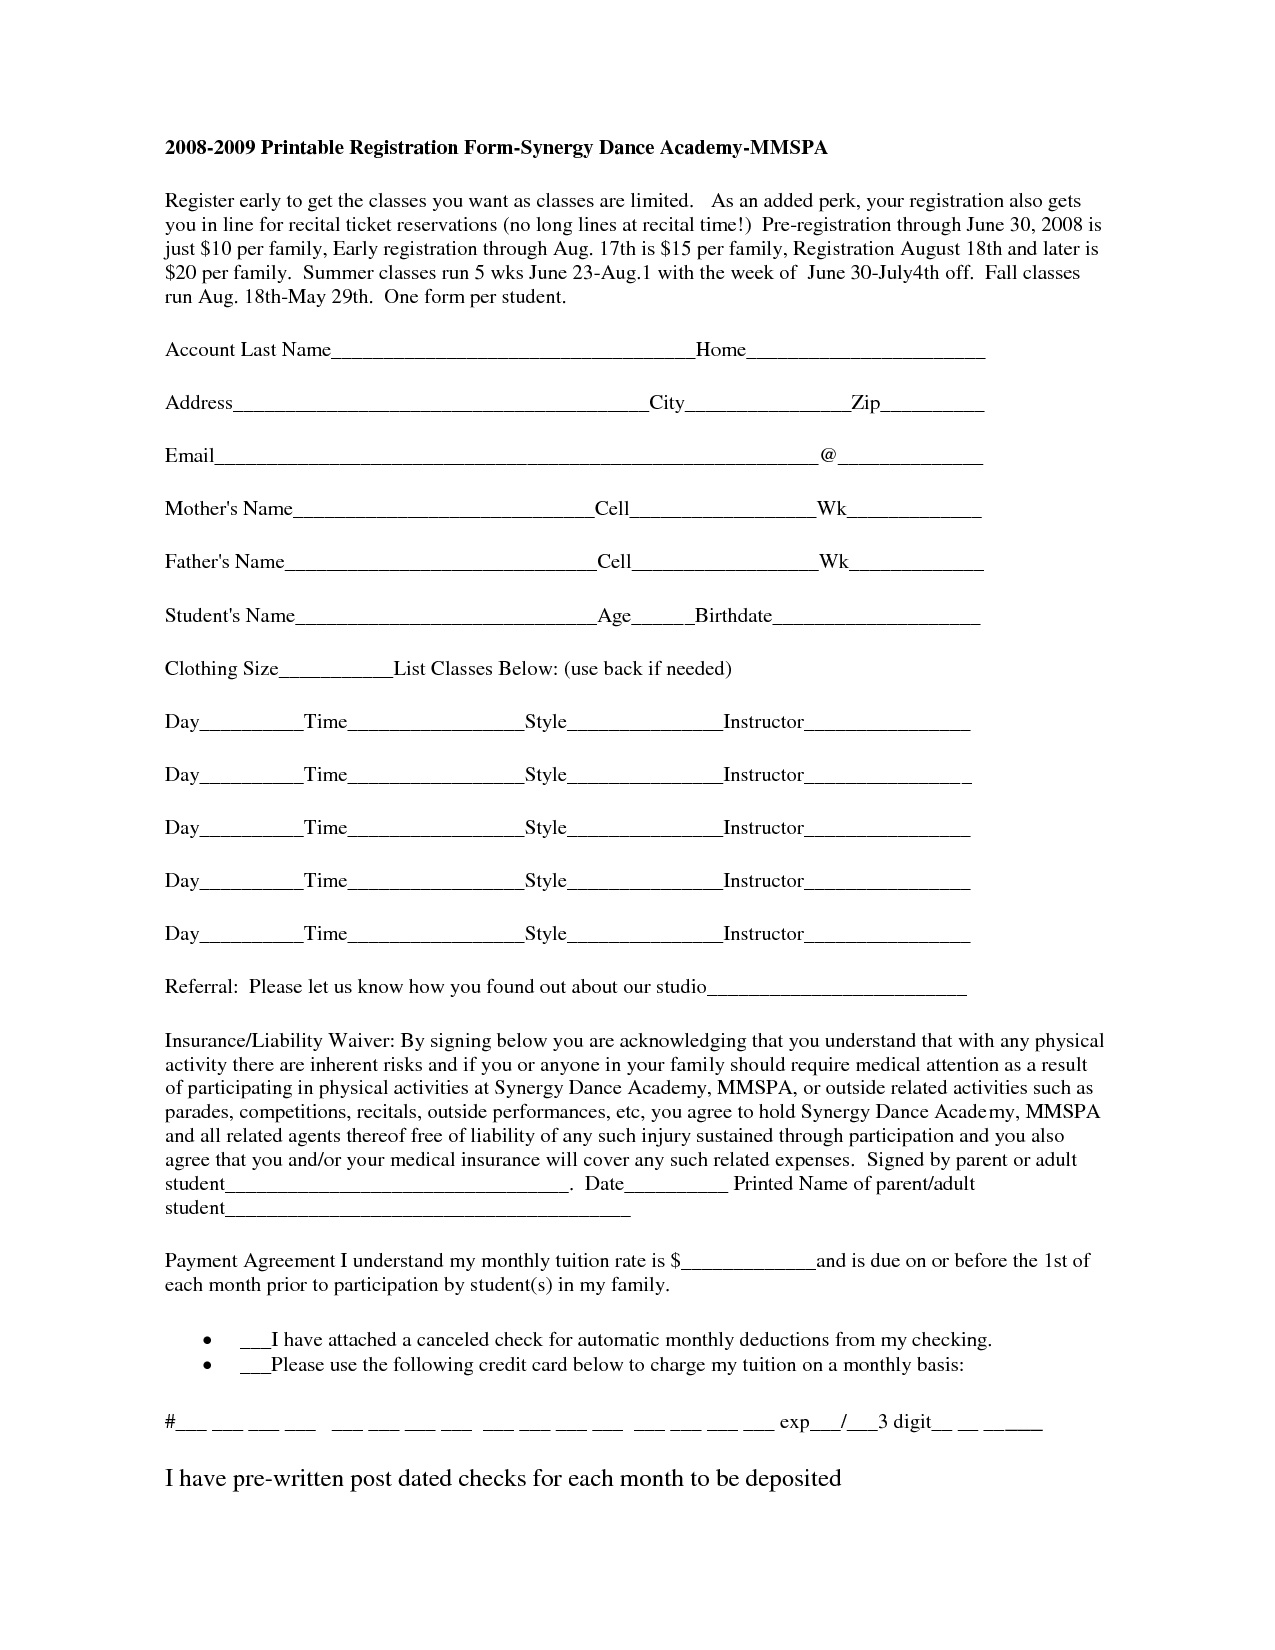 Free Printable Registration Form Template | Shop Fresh - Free Printable Membership Forms